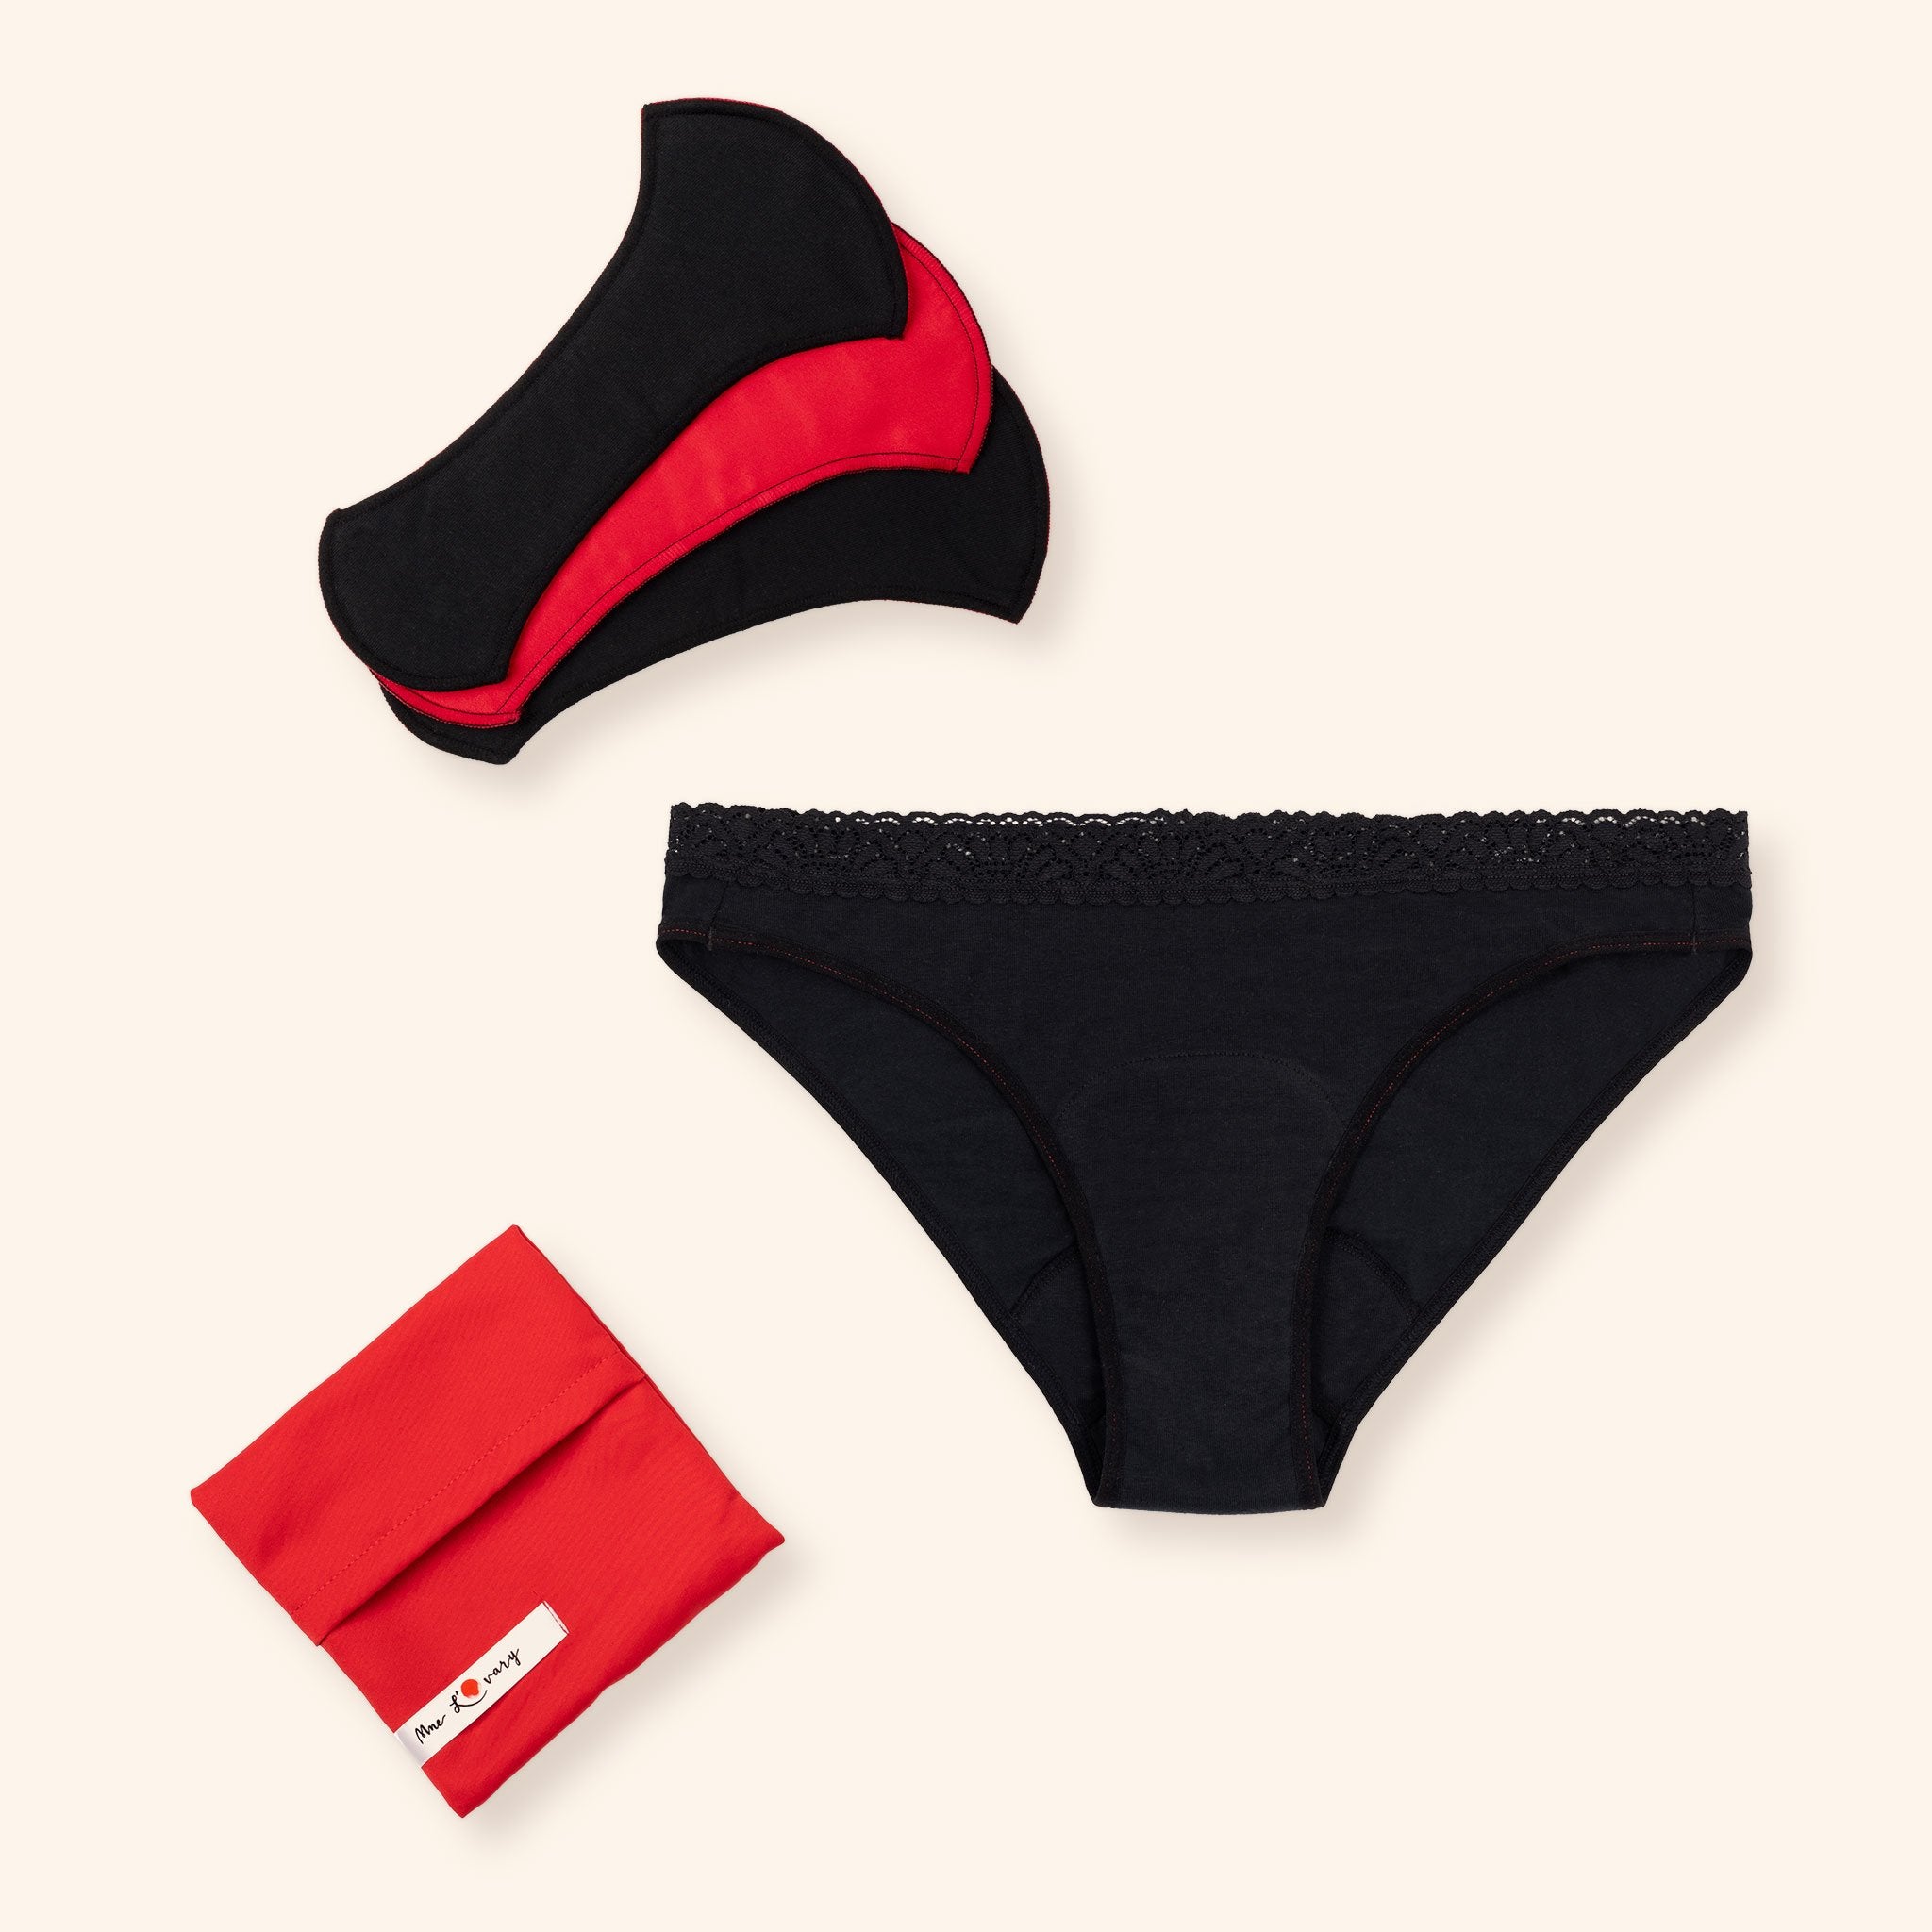 Bikini Lacy ✦ 3-in-1 Period underwear